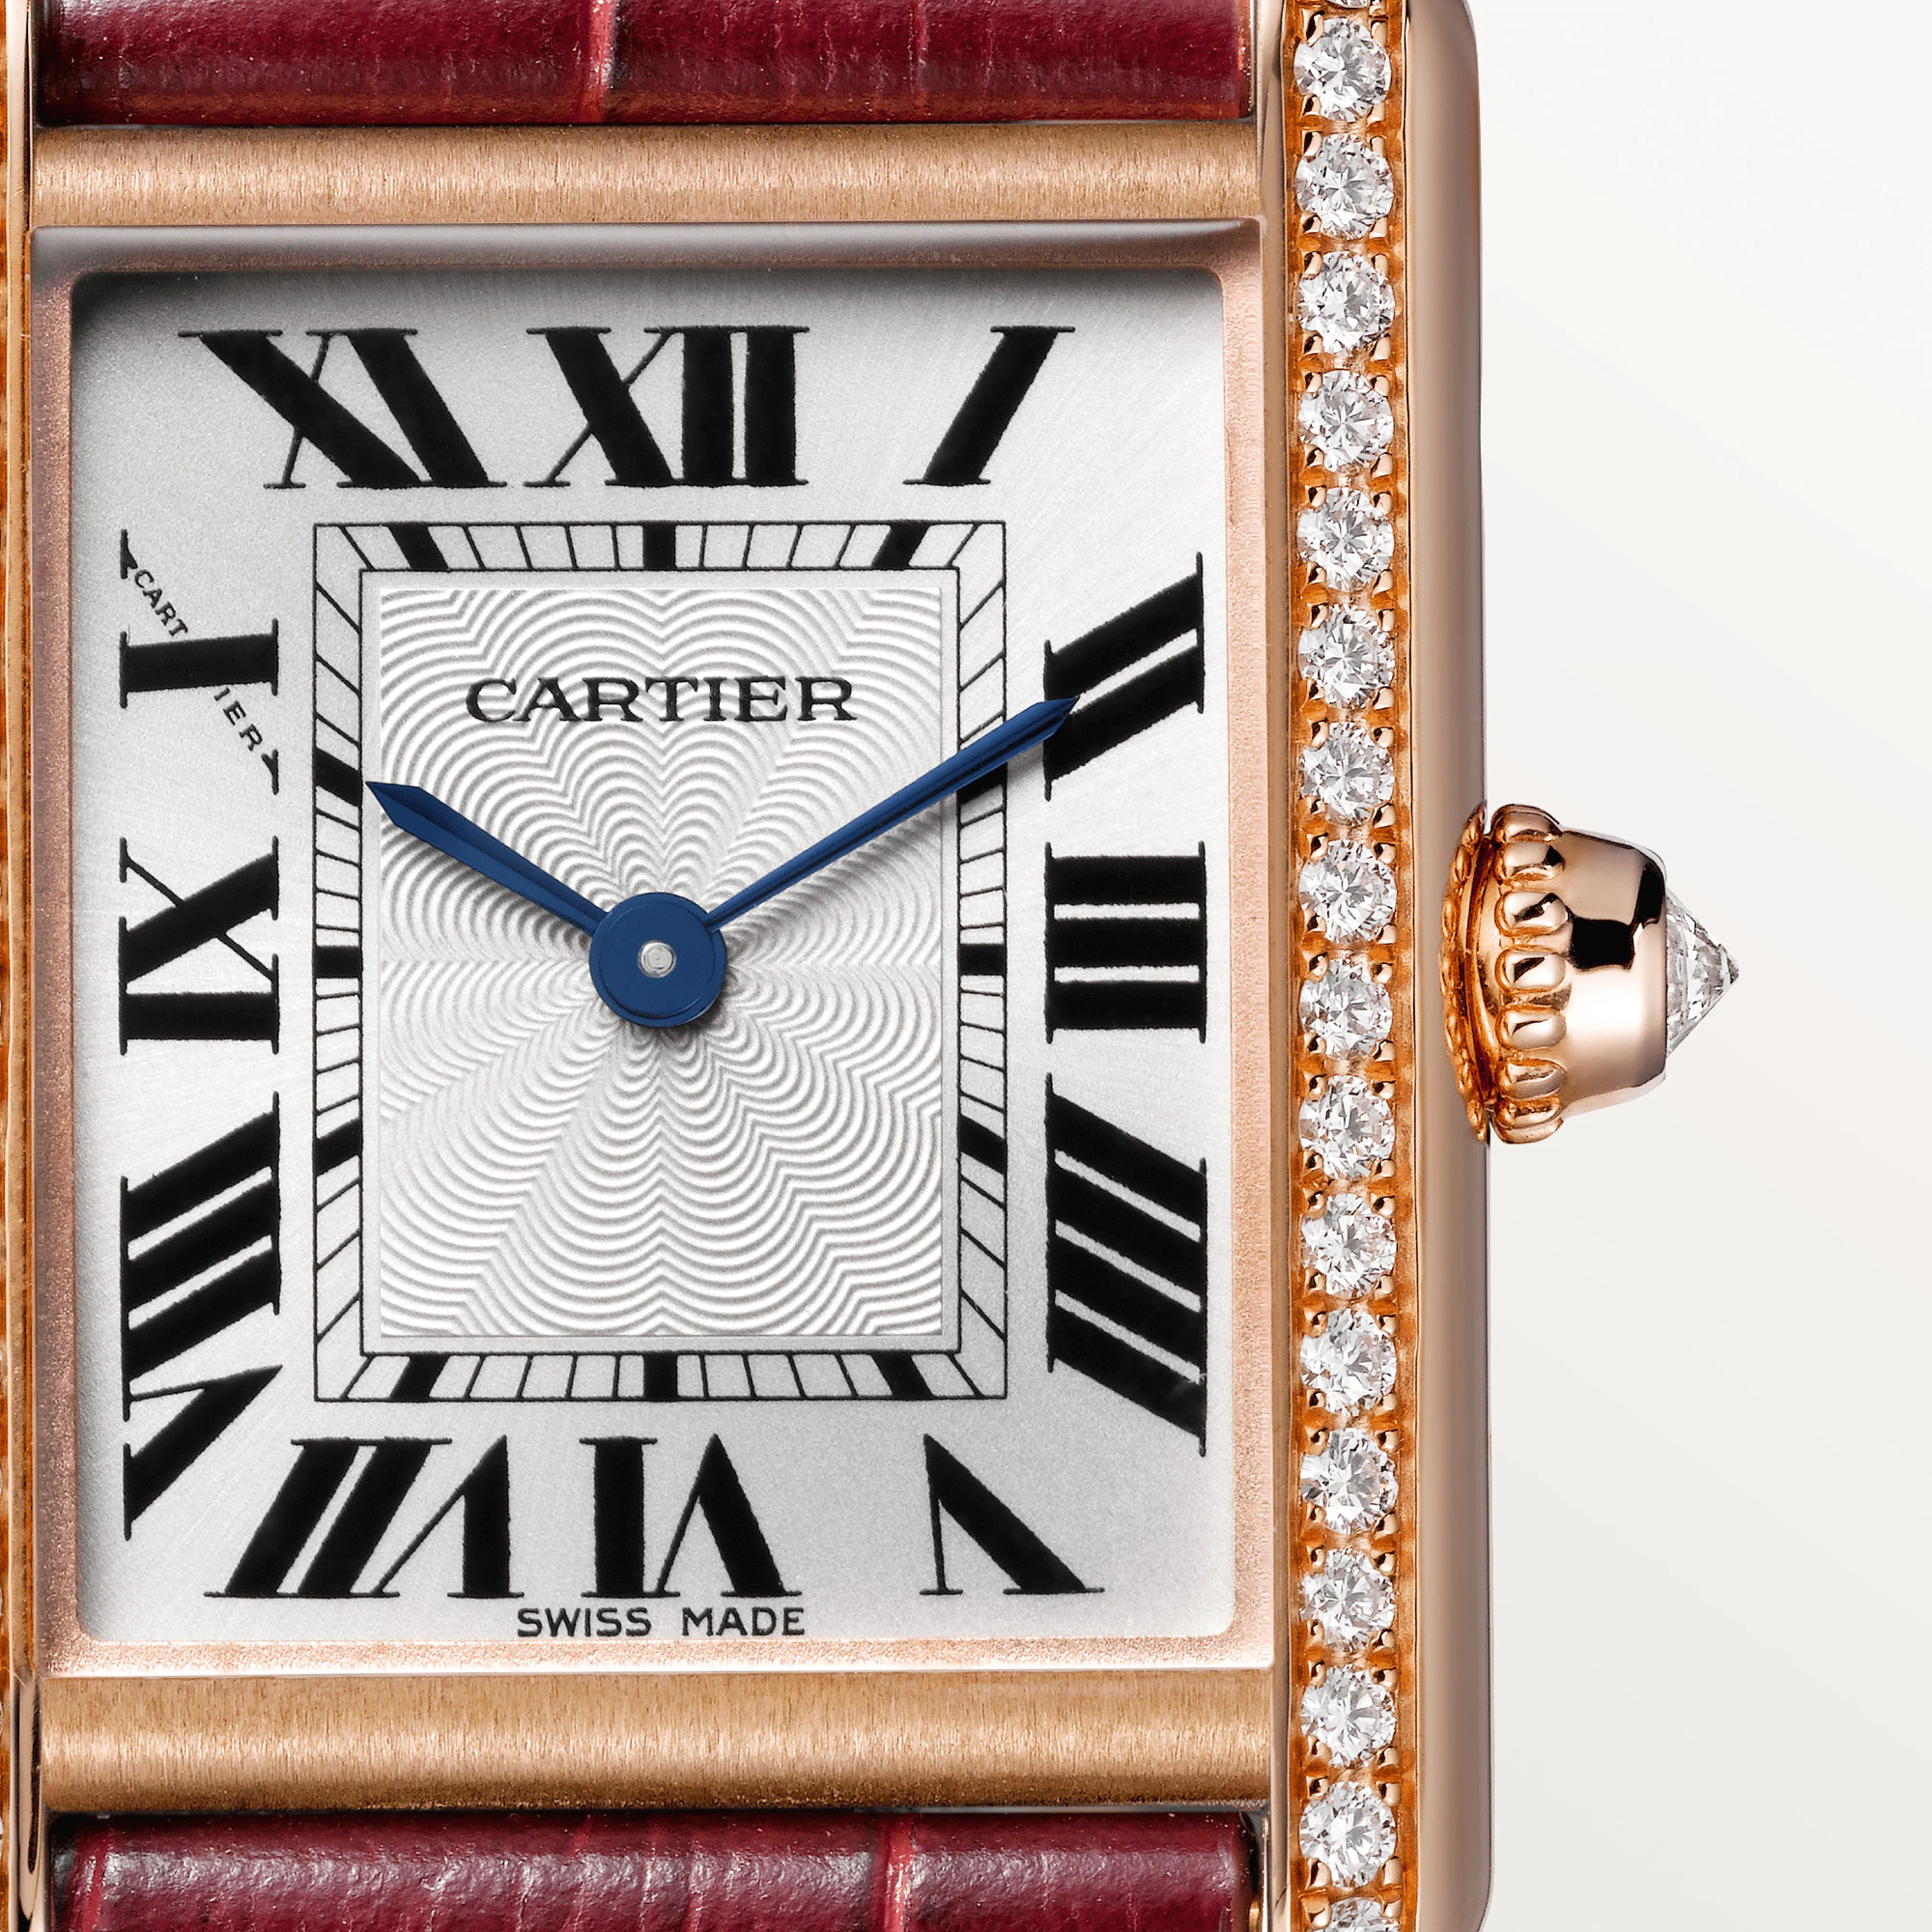 Cartier Tank Rose Gold & Diamond Lady's Watch